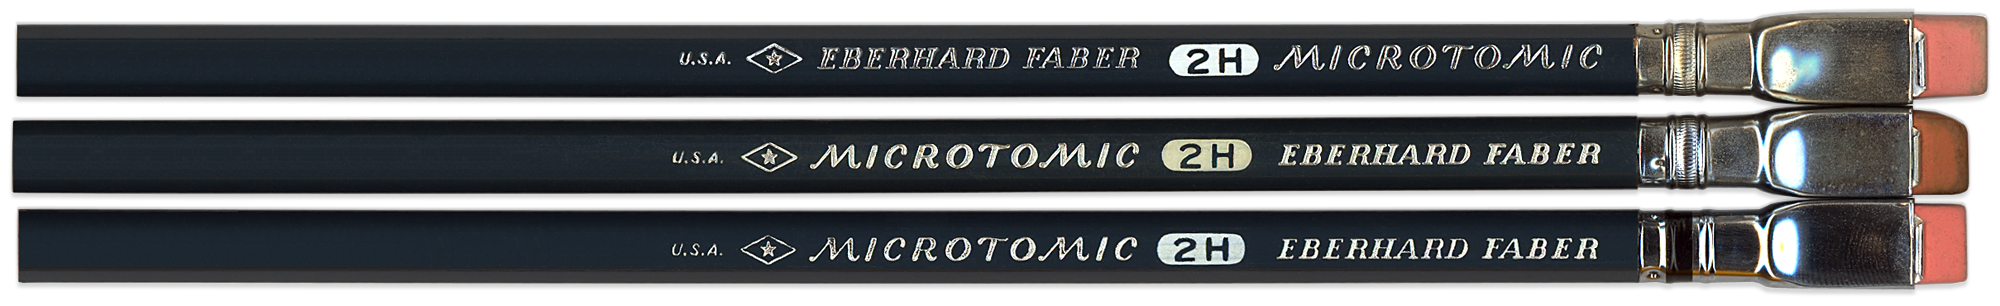 microtomic2h_adj